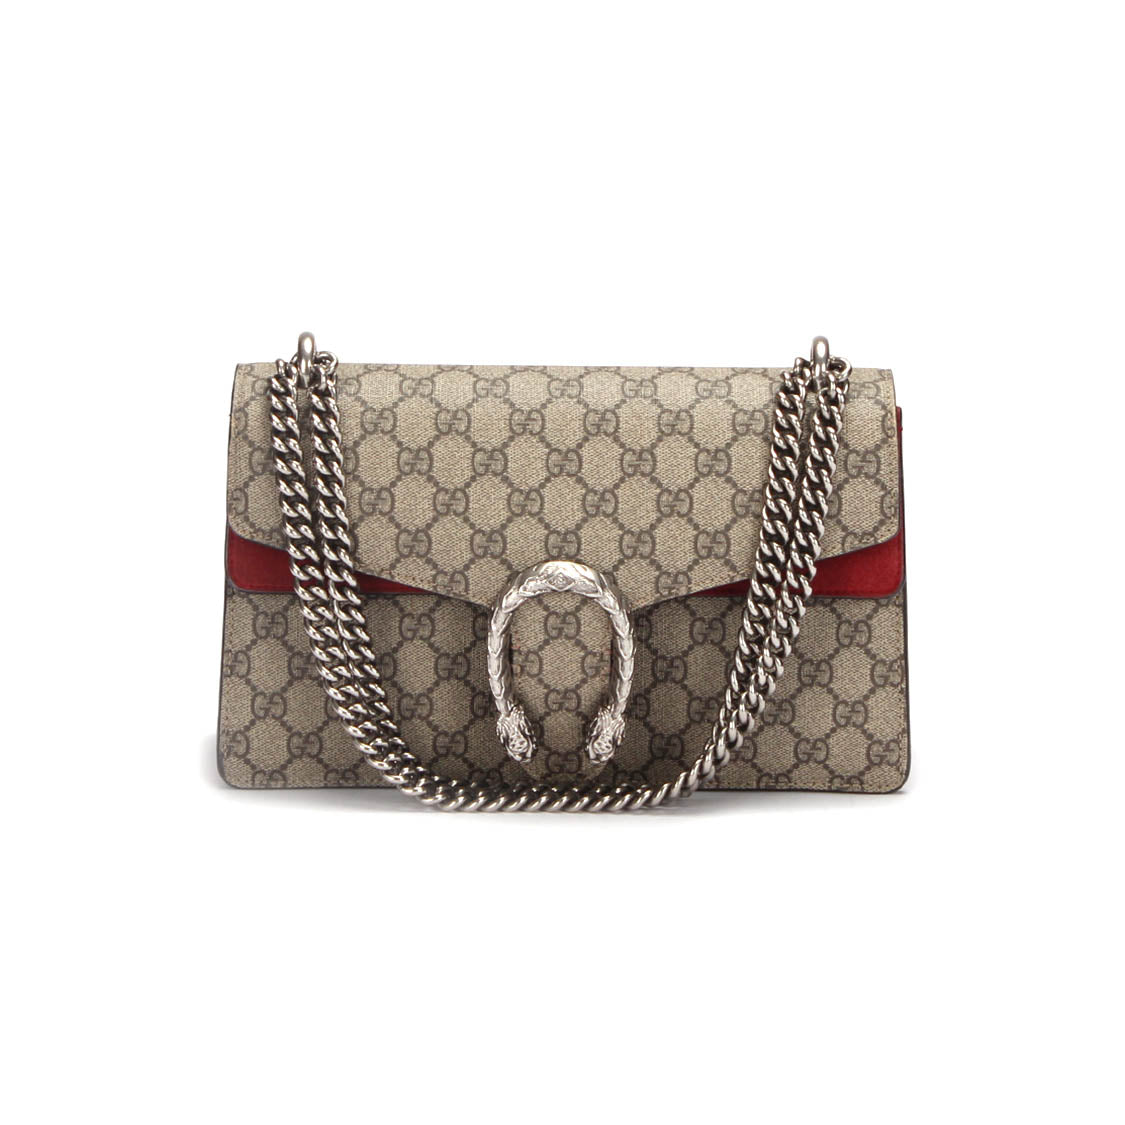 Gucci Small GG Supreme Dionysus Shoulder Bag Canvas Shoulder Bag 400249 in Excellent condition